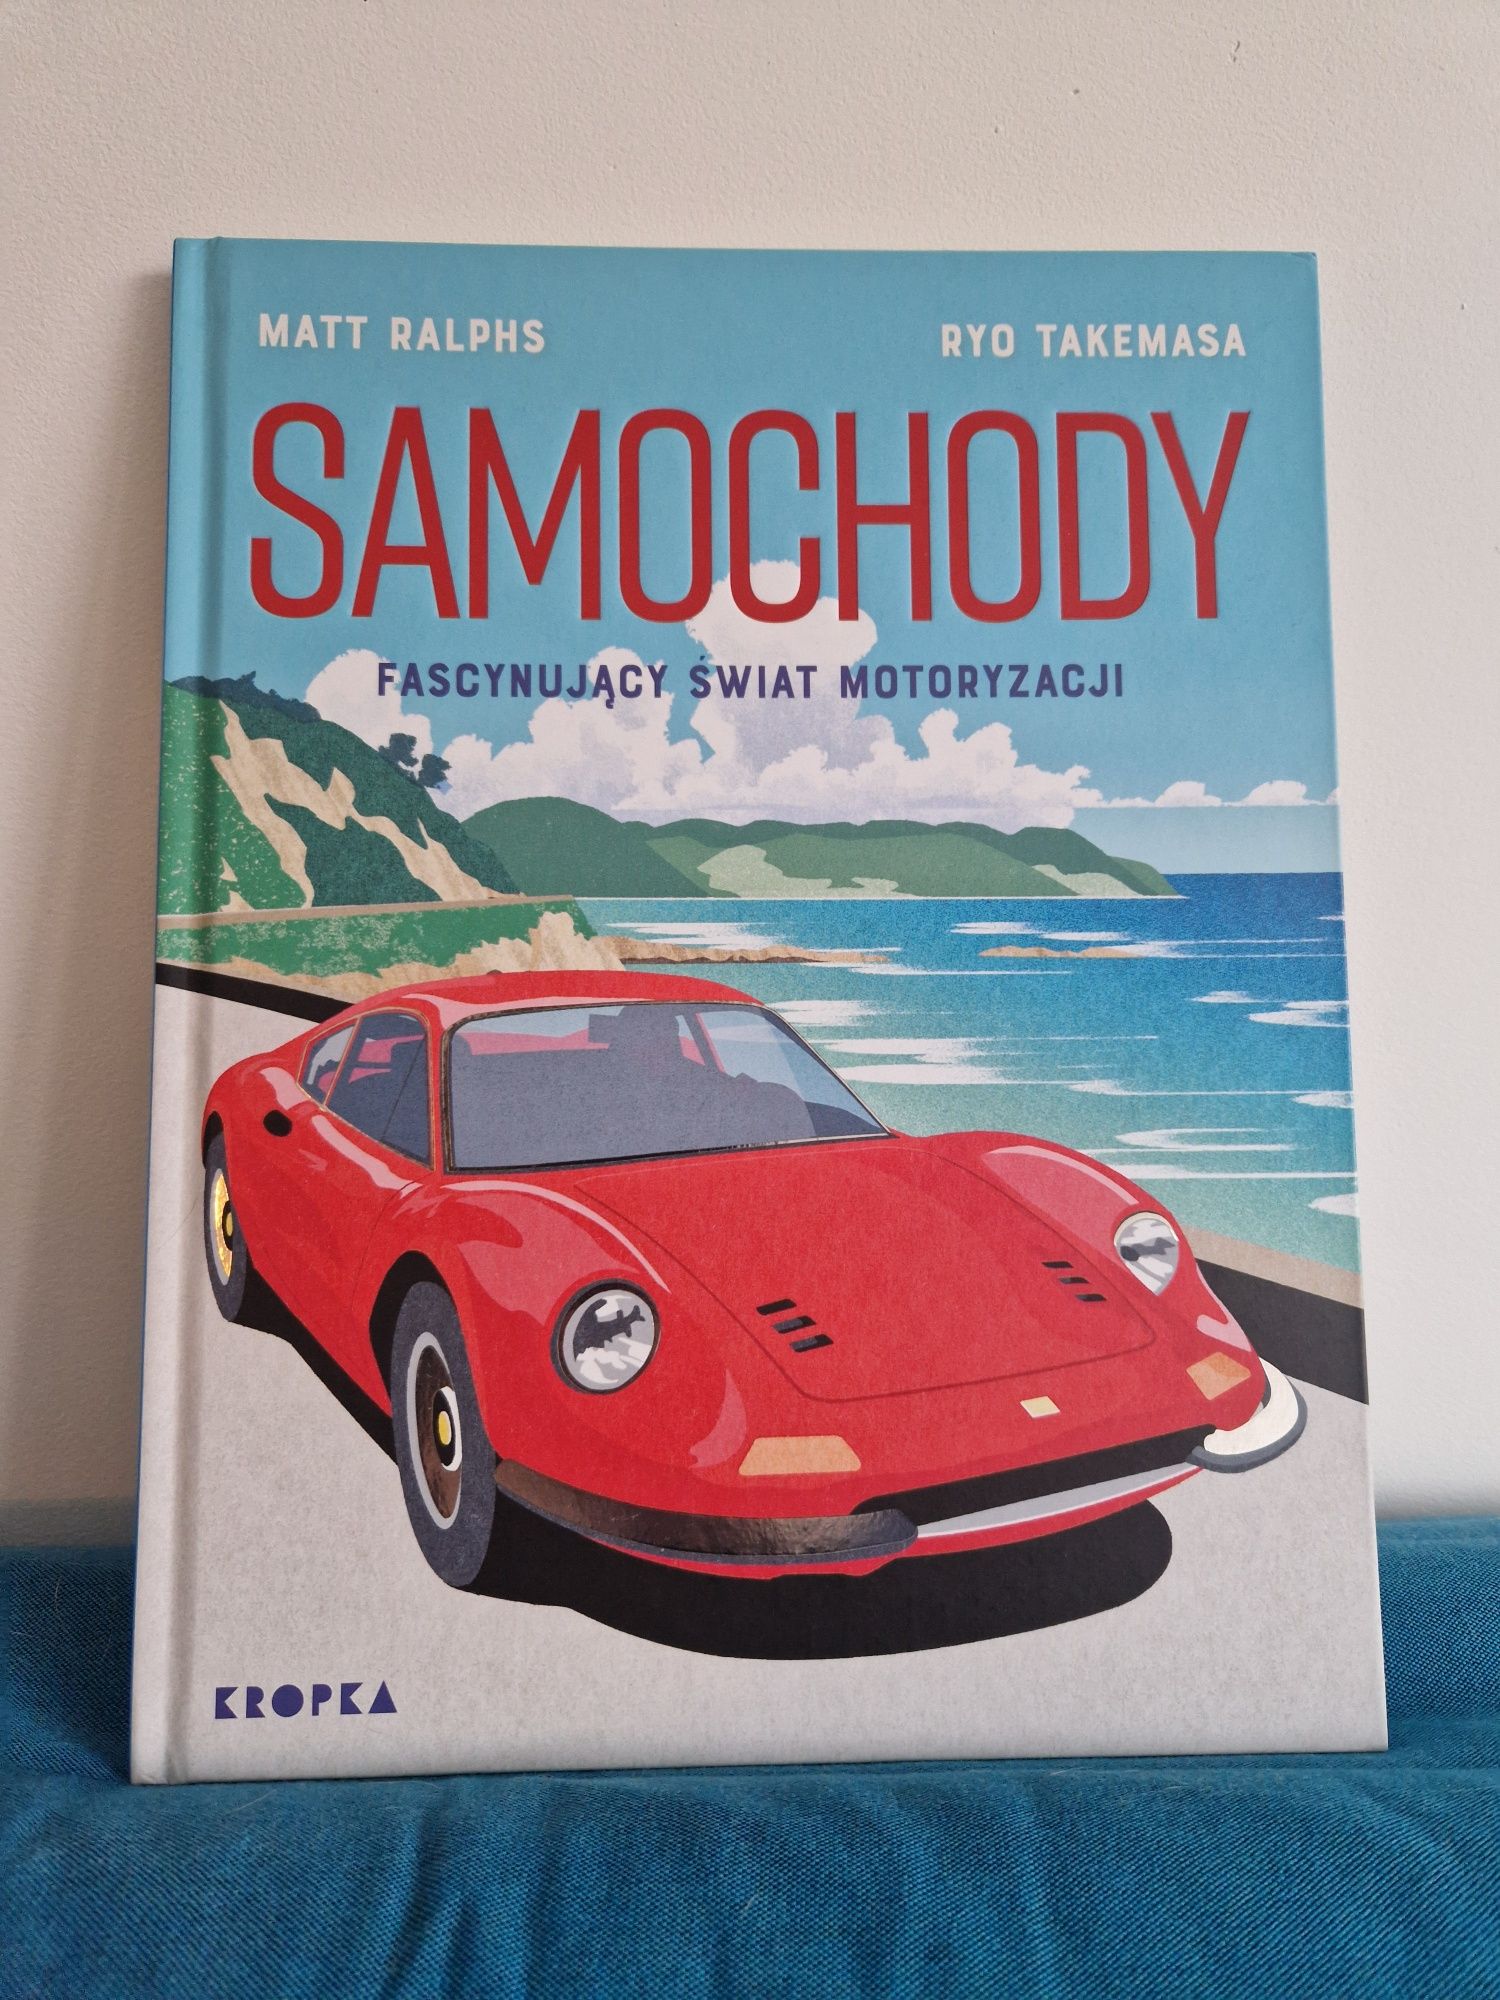 Książka "Samochody" Matt Ralphs, Ryo Takemasa